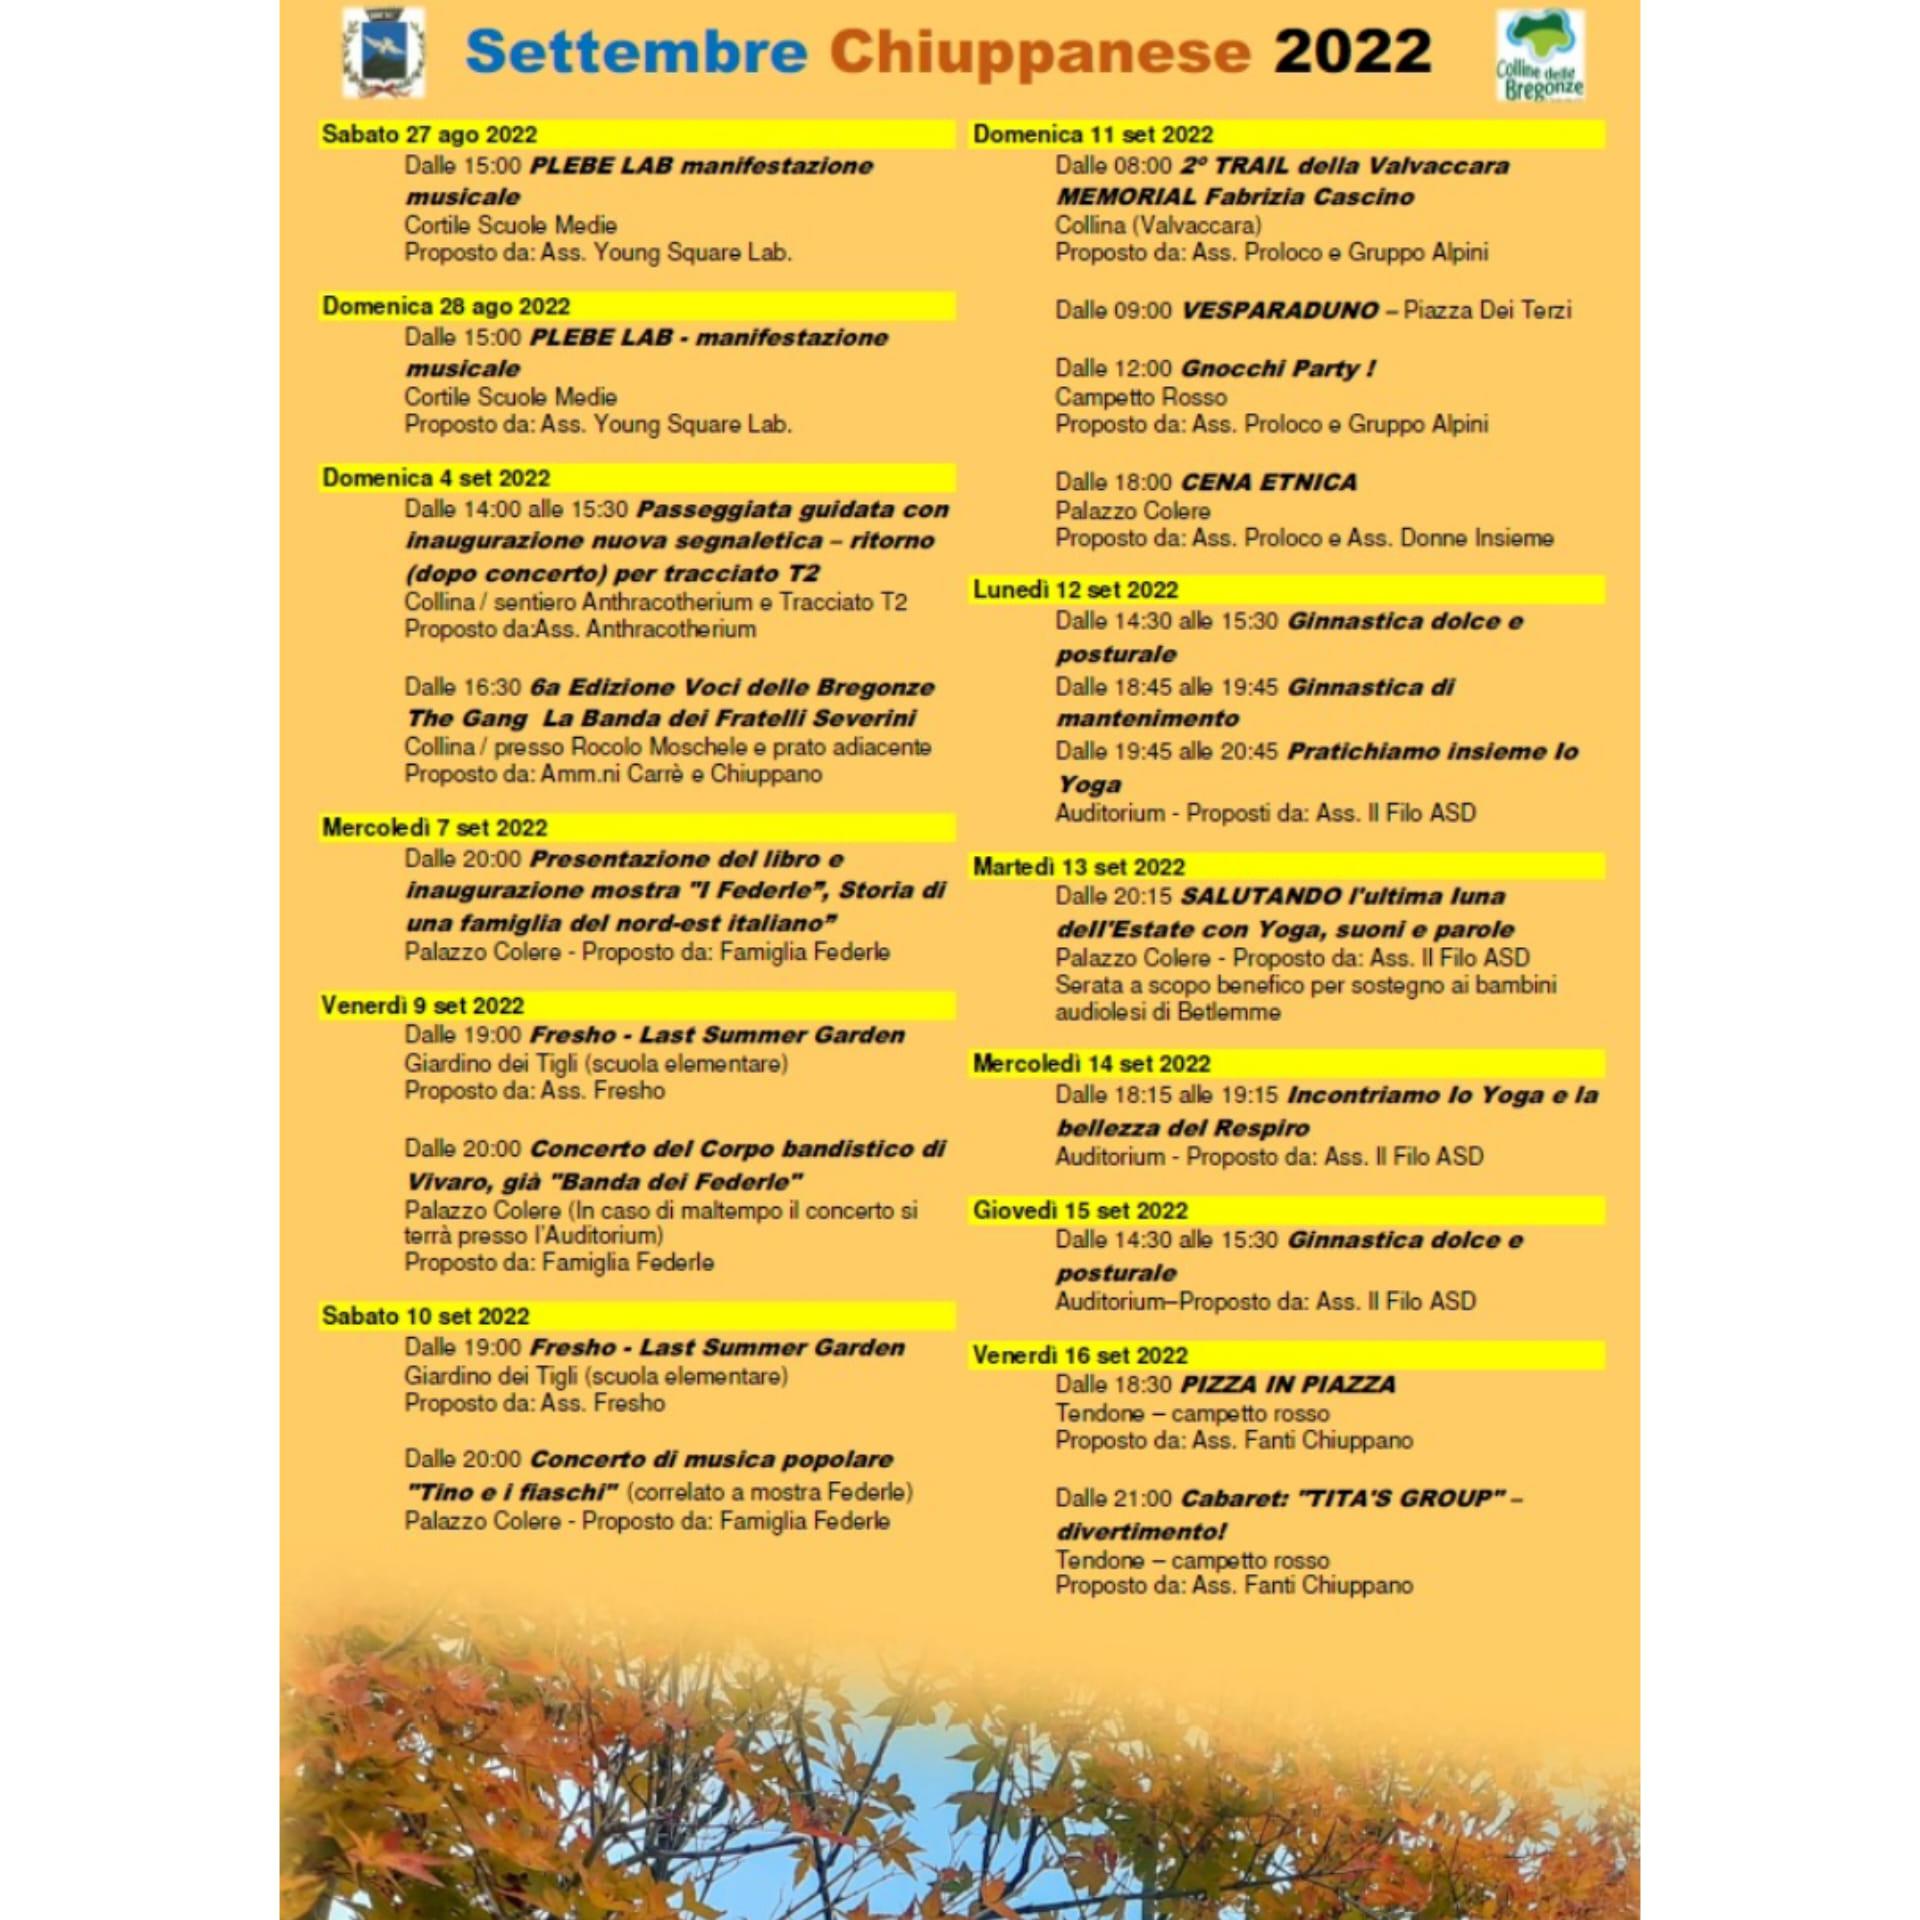 Settembre Chiuppanese 2022 